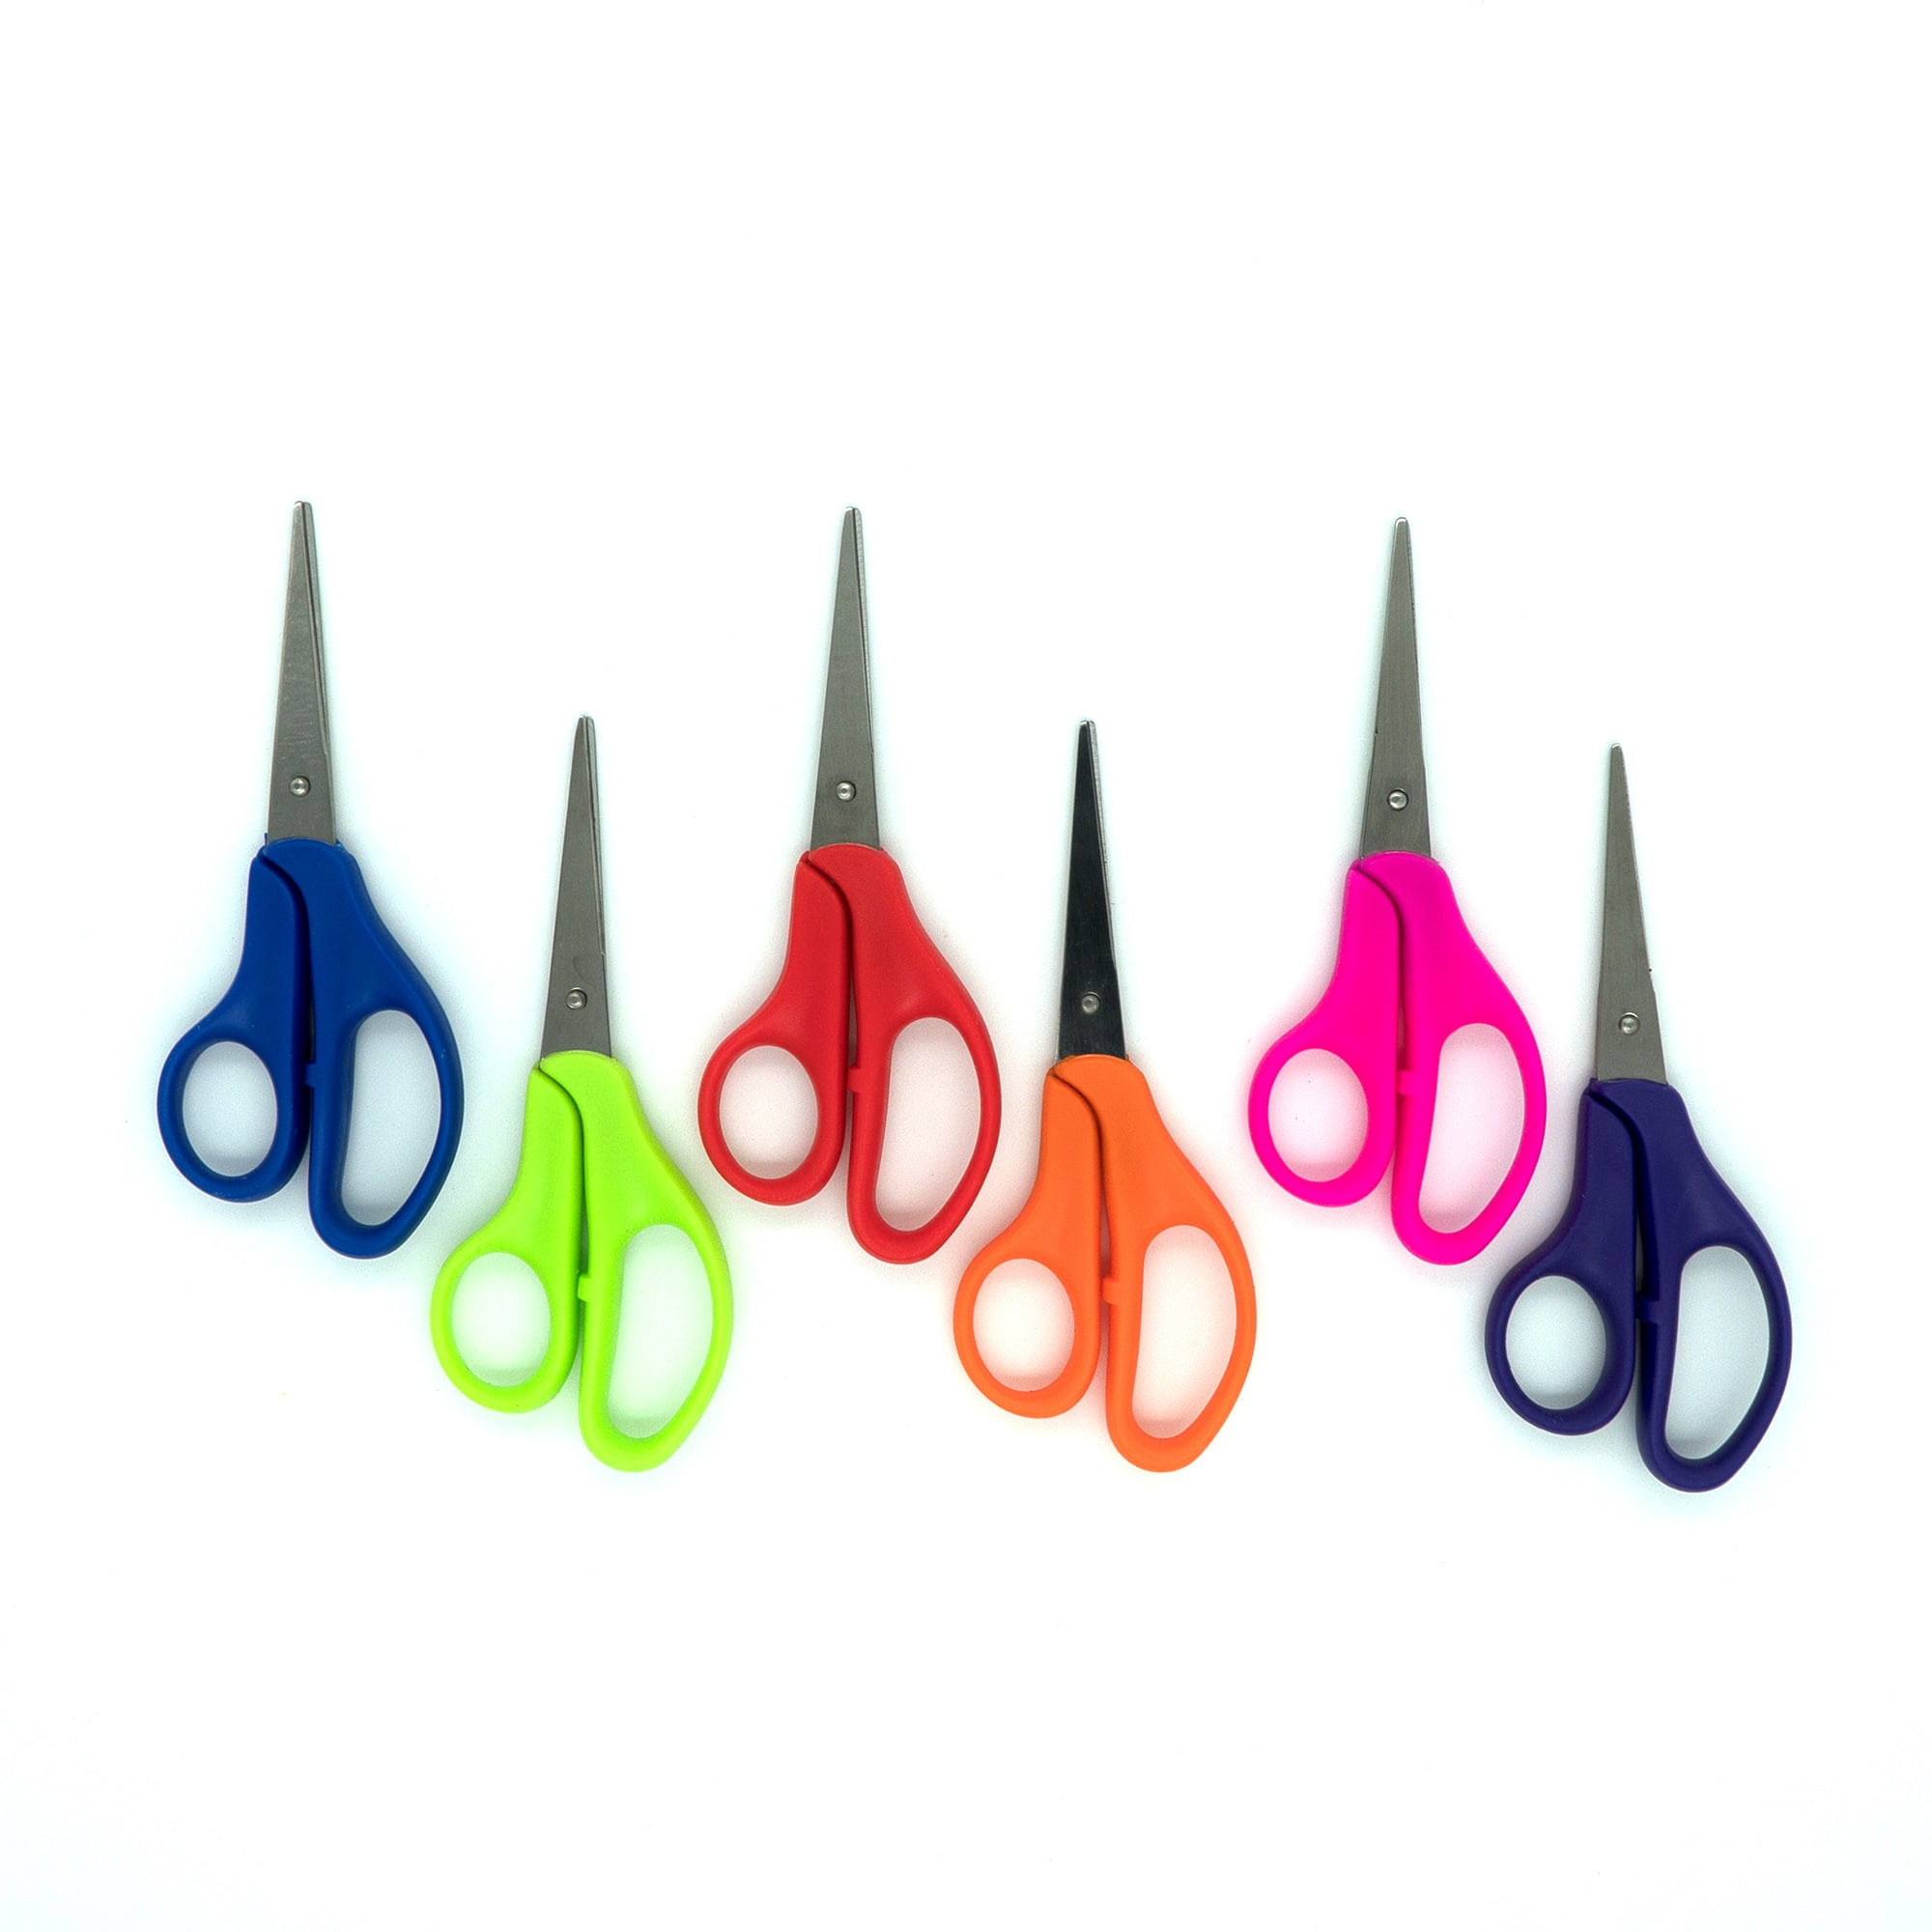 Scissors All Purpose,6 inch Scissors Scissors Set,Comfort-Grip Handles  Sewing Scissor,Sharp Pointed Scissors Perfect for Cutting Paper Suitable  for